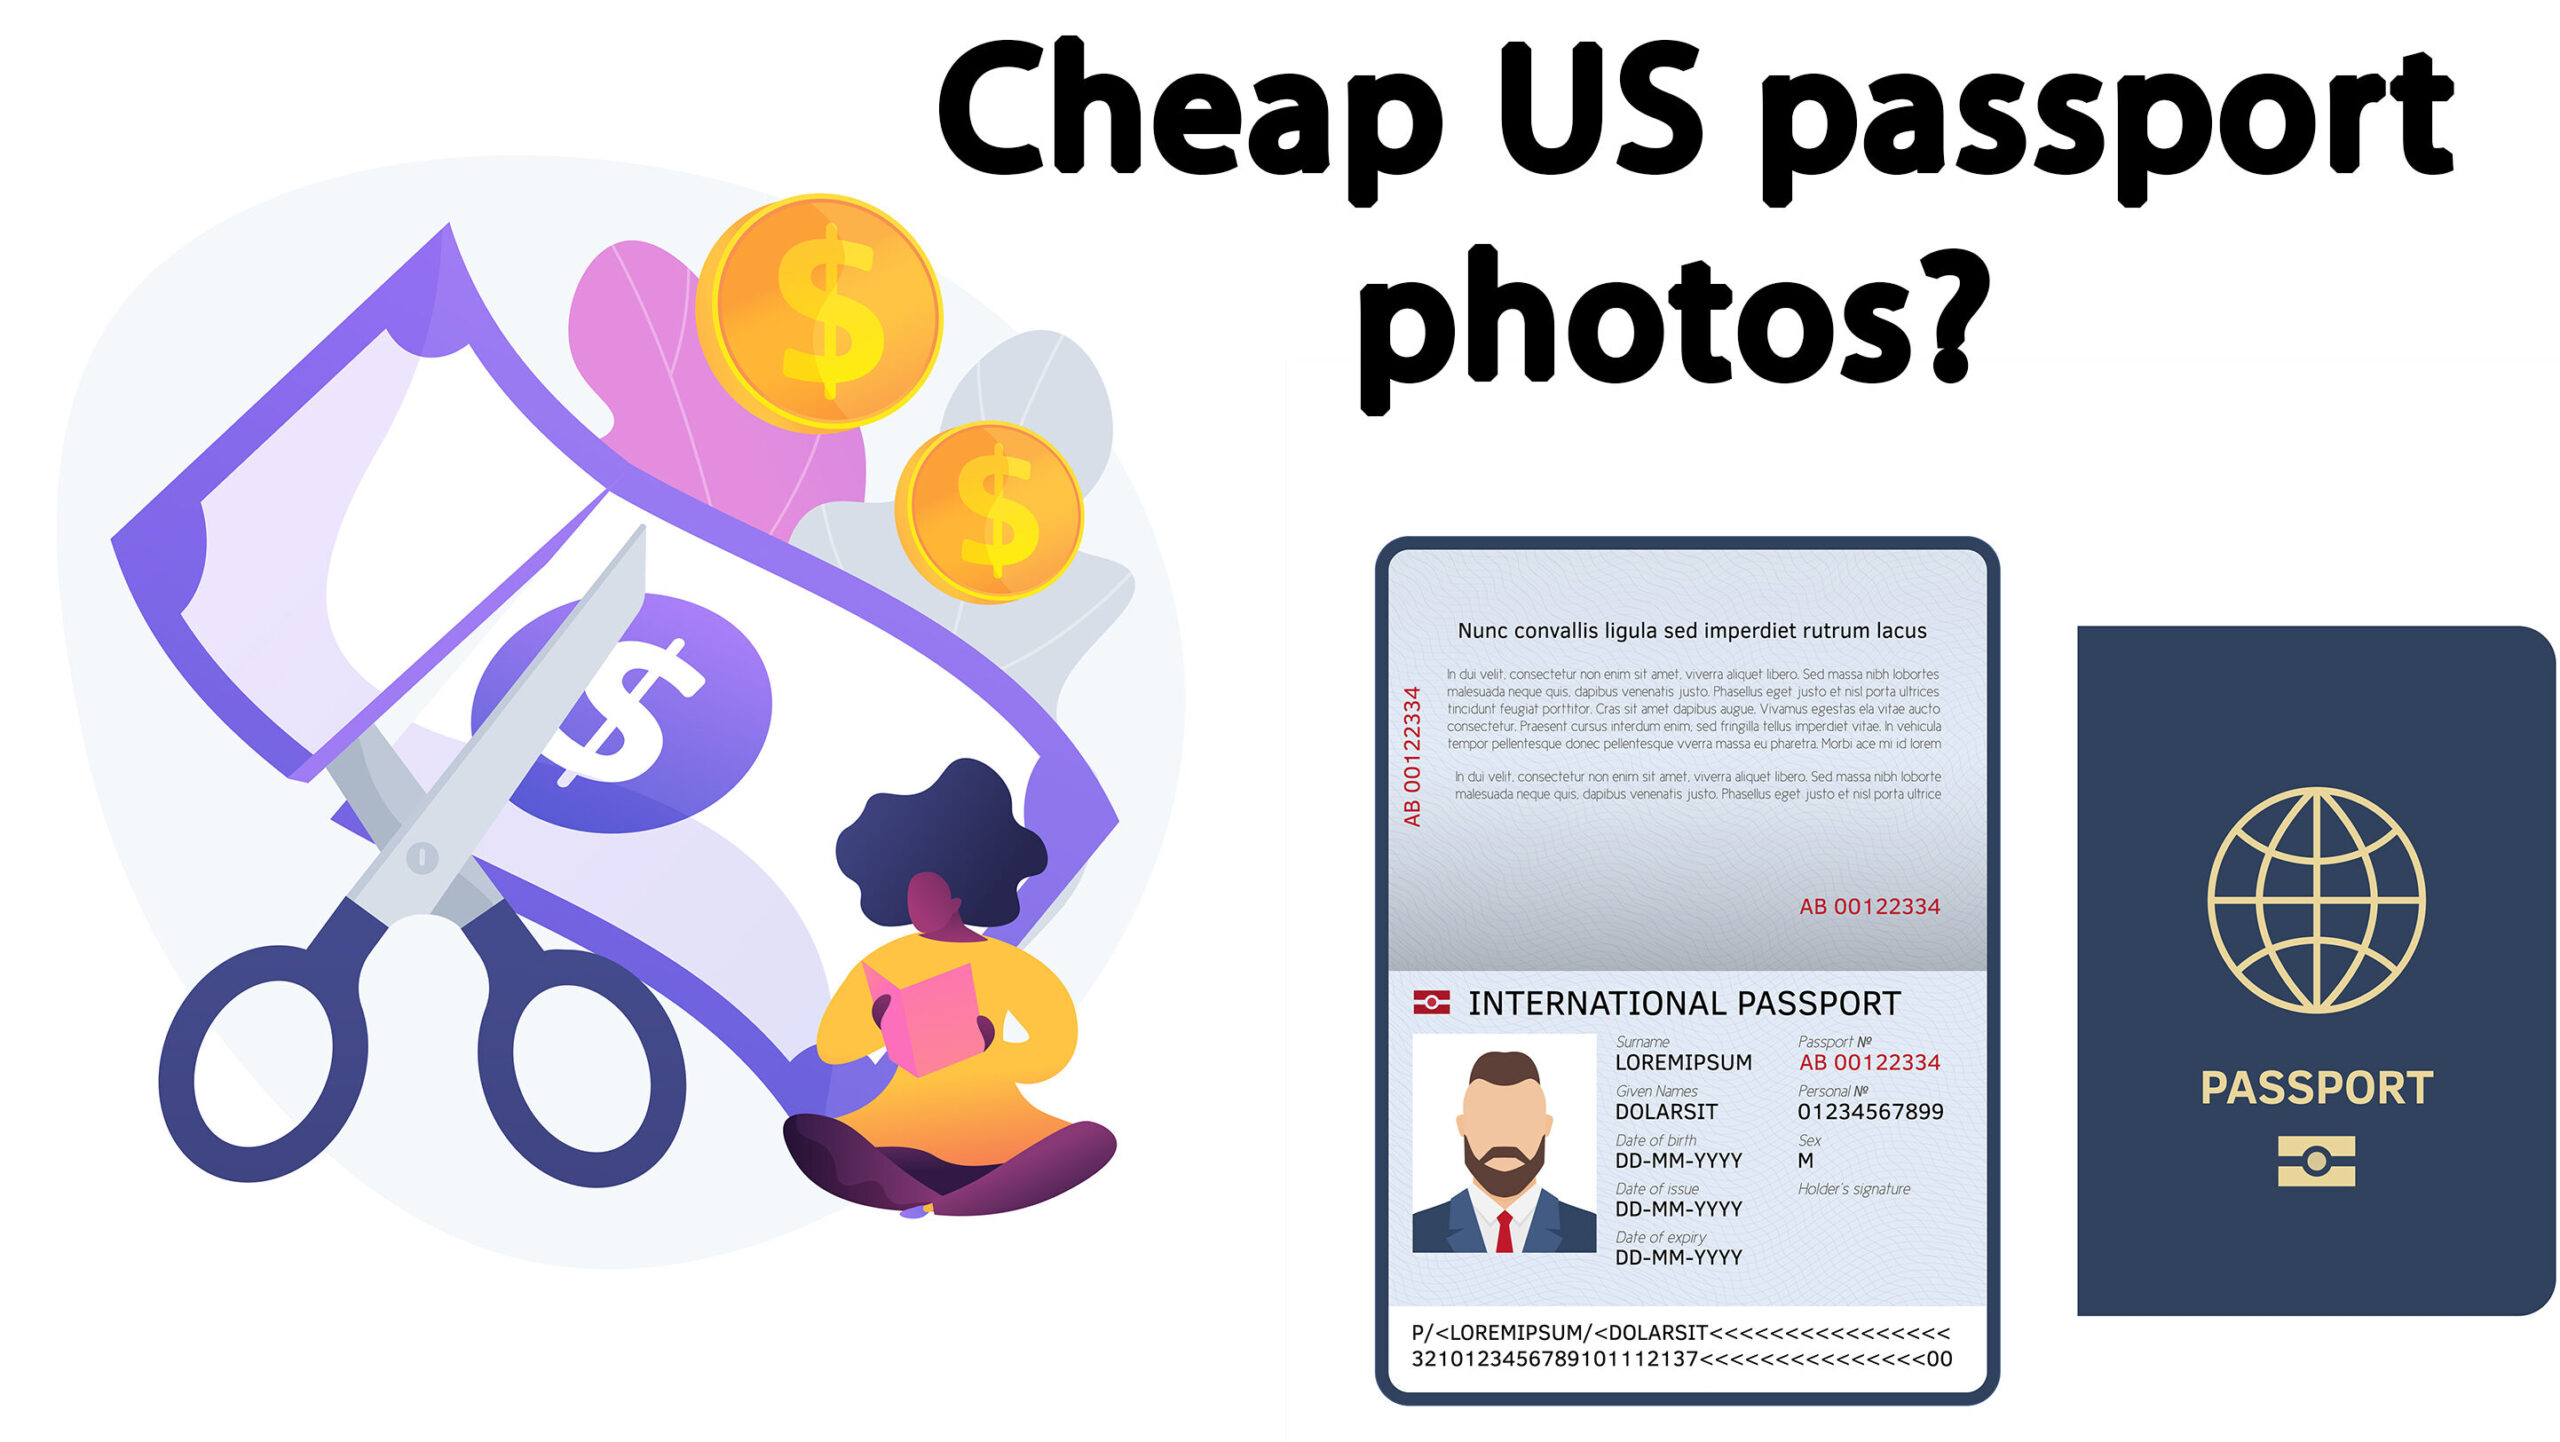 Smartphone Passport Photo System w/ Photo Cutter Preconfigured for US  Passports